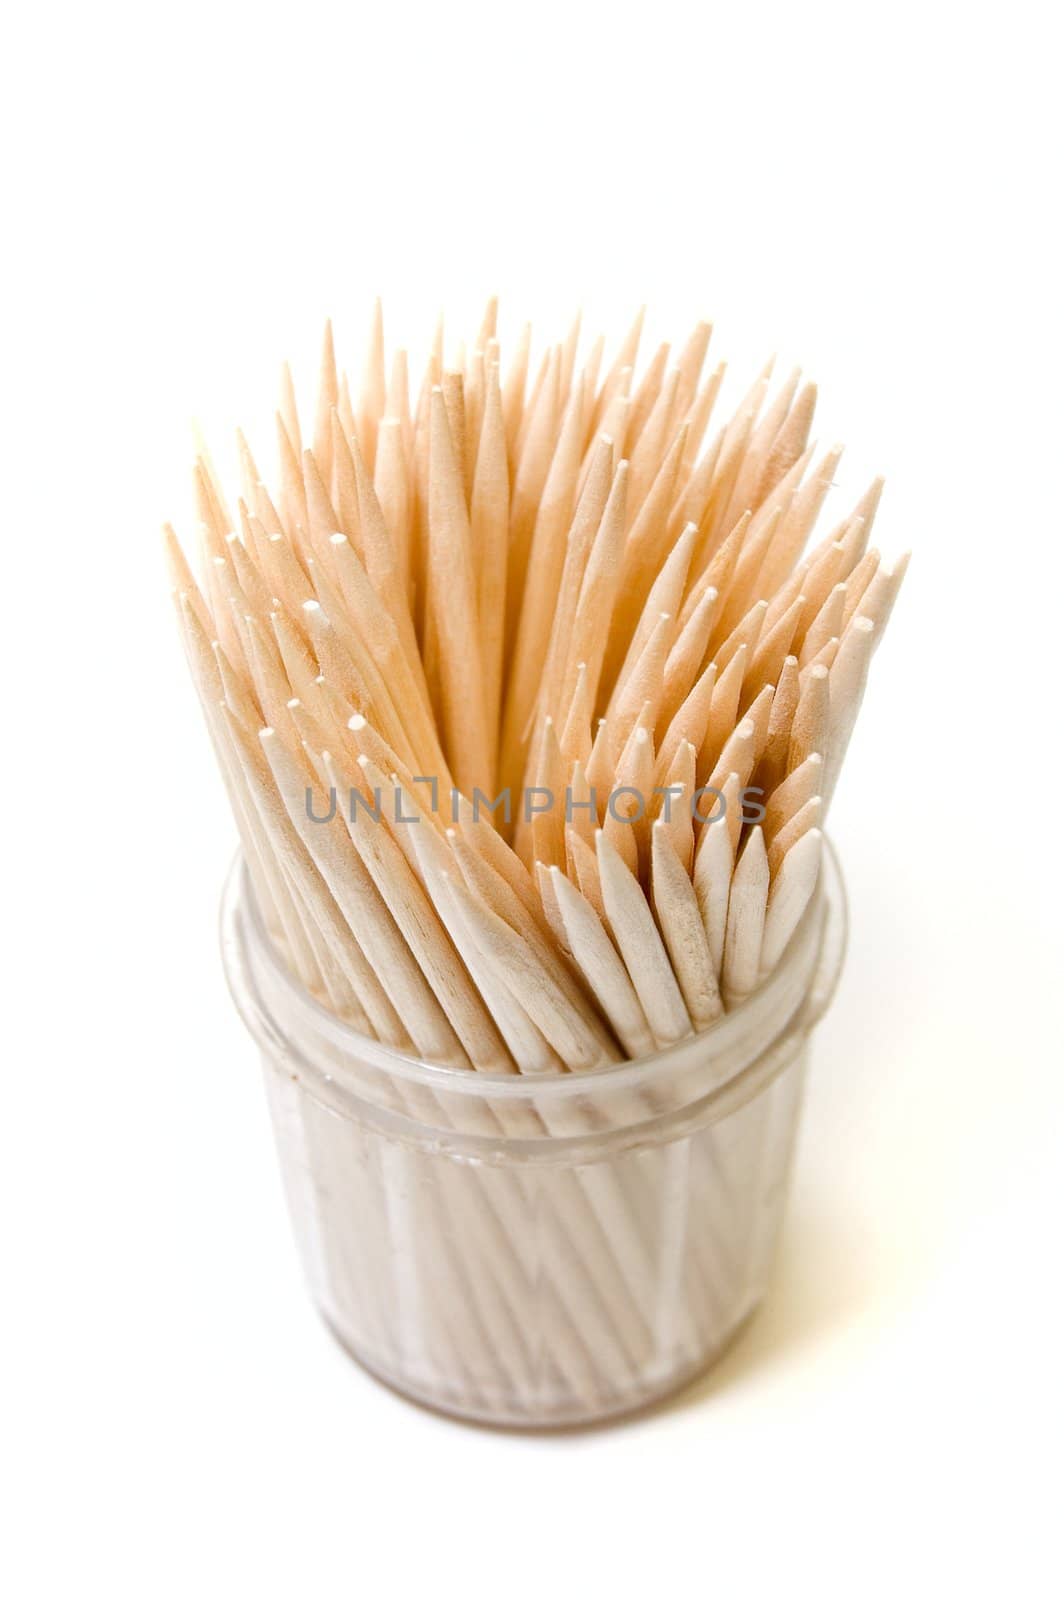 Toothpicks by rusak